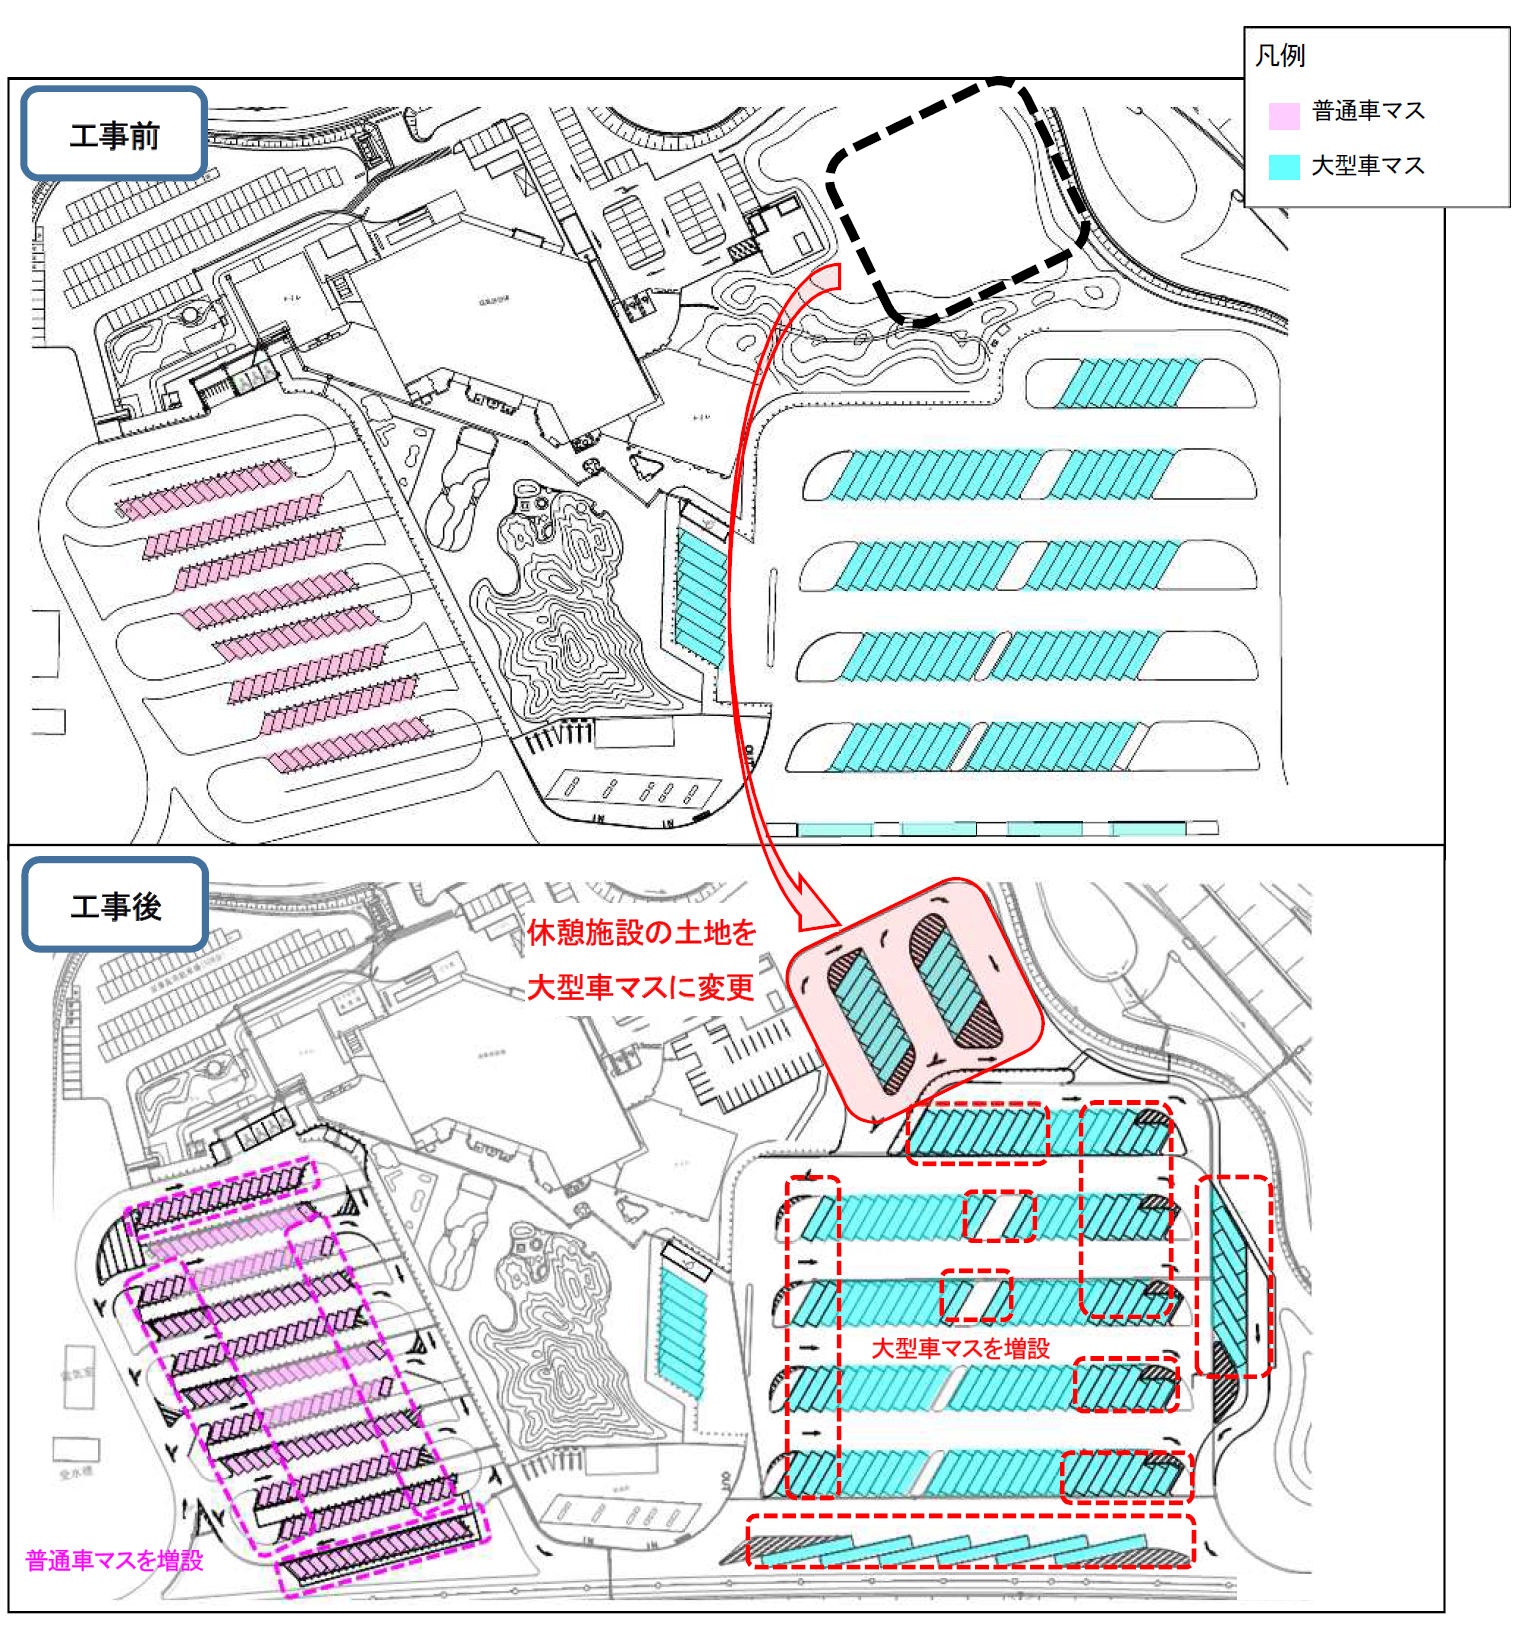 Image of parking lot expansion (E1A Shin-Tomei Shizuoka SA (In-bound))